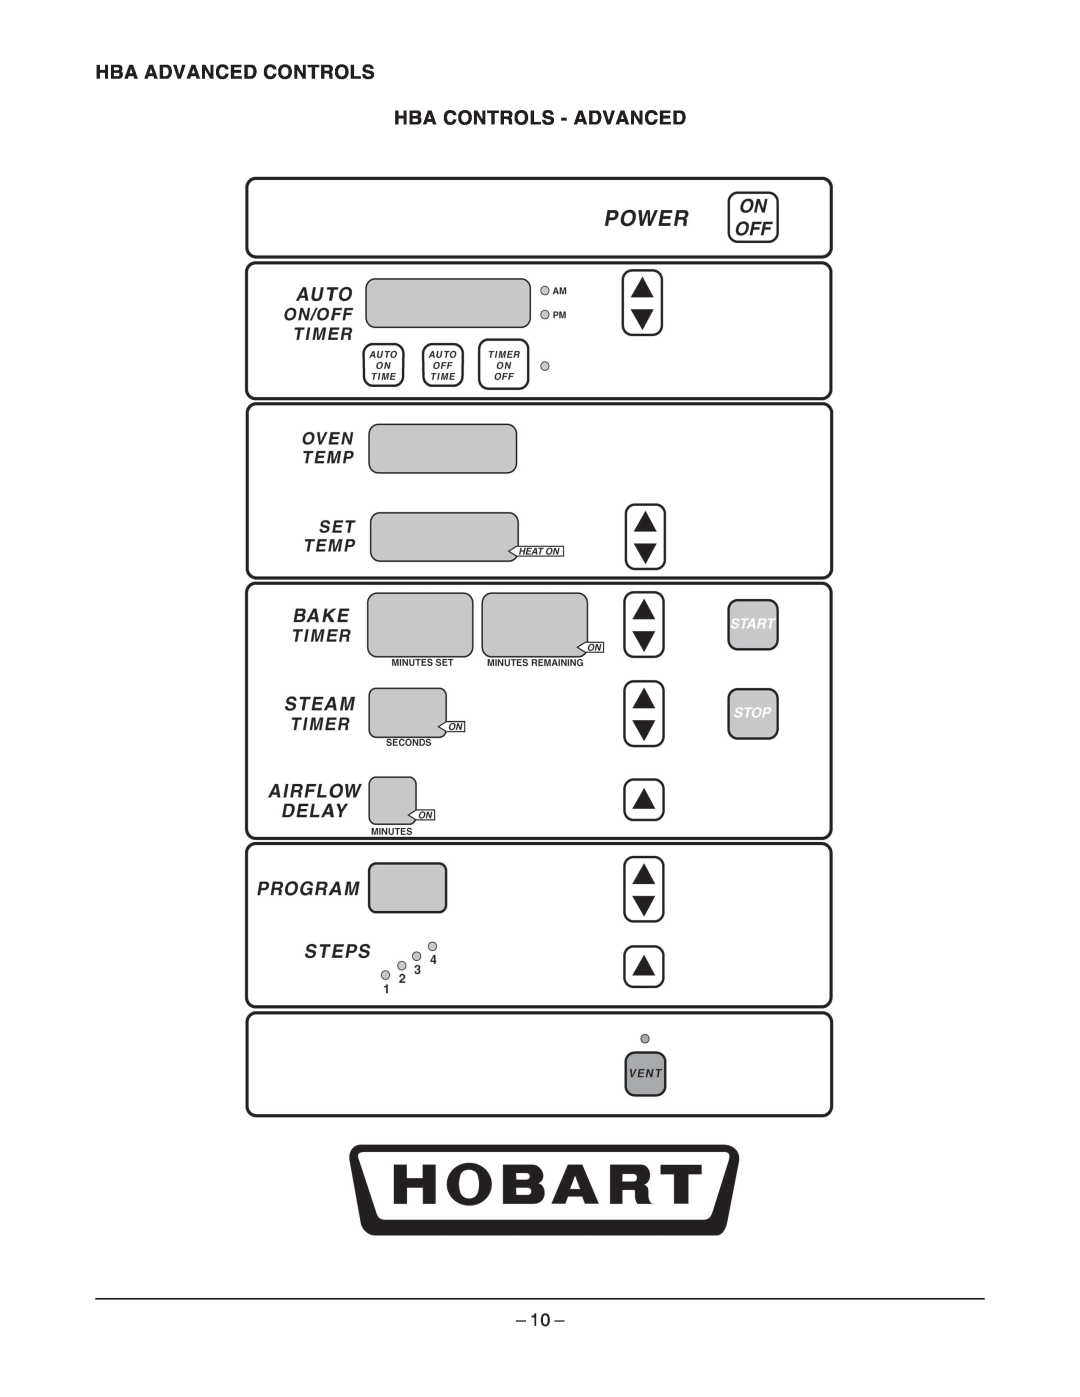 Hobart HBA2E, HBA2G manual Hba Advanced Controls Hba Controls - Advanced 